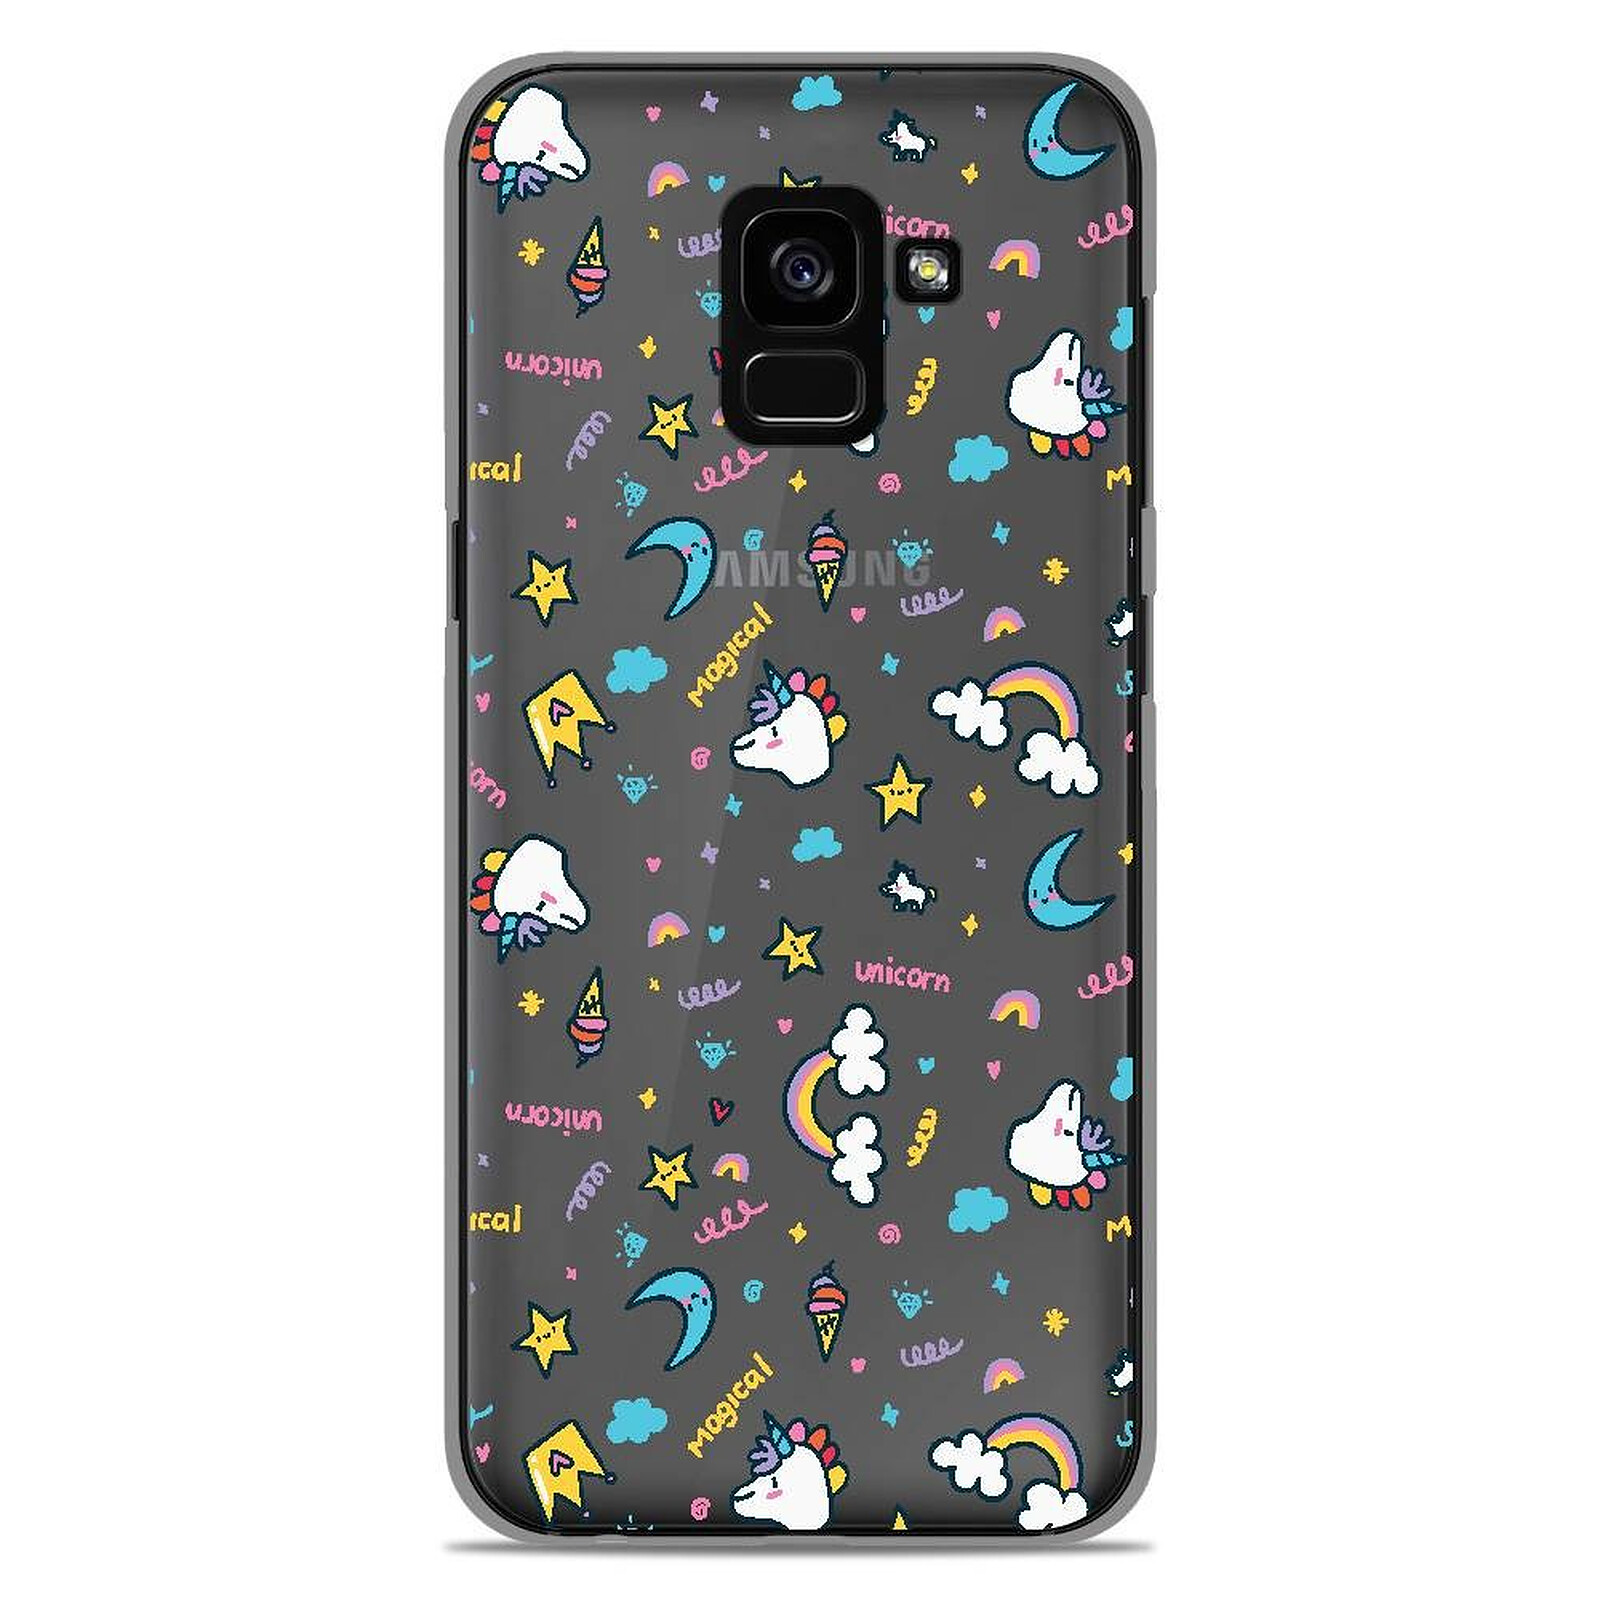 كم سعر الايباد 1001 Coques Coque silicone gel Samsung Galaxy A8 2018 motif Licorne rainbow - Coque téléphone 1001Coques sur LDLC